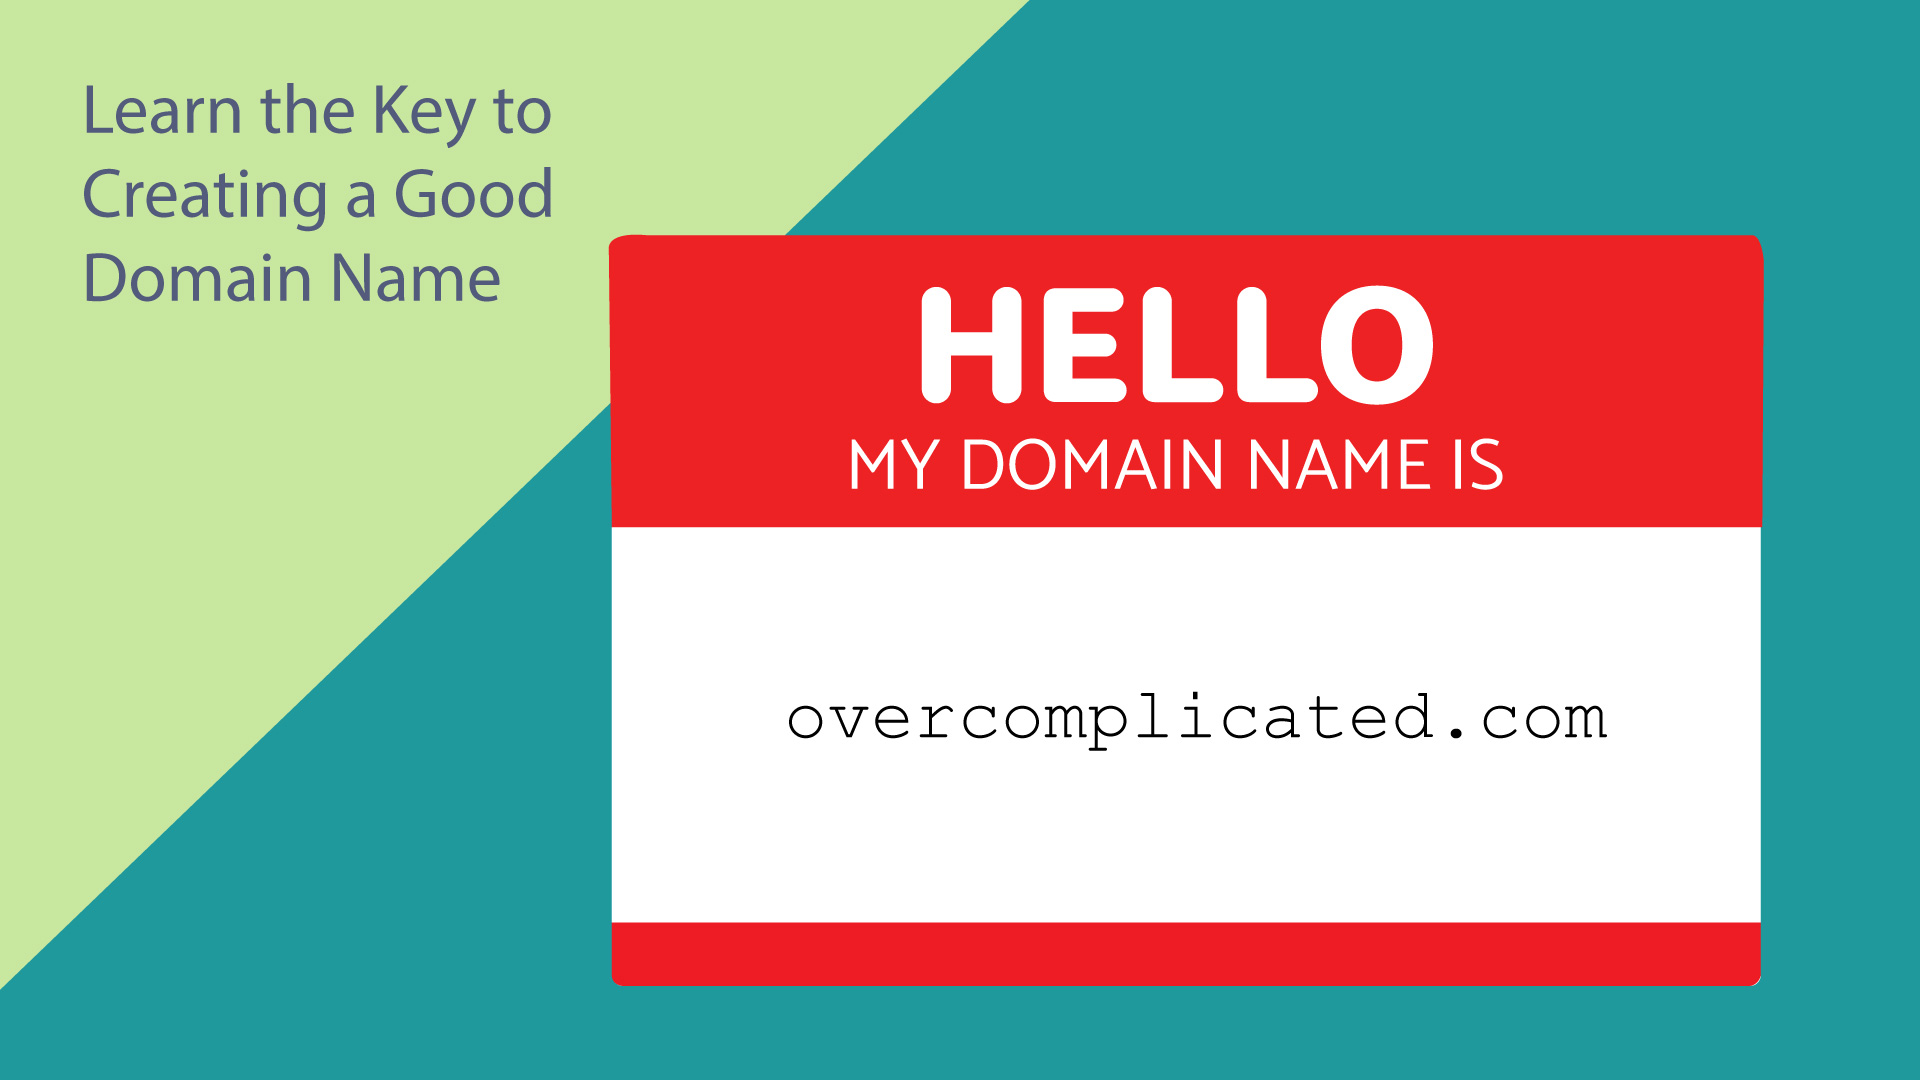 Picking a Good Domain Name